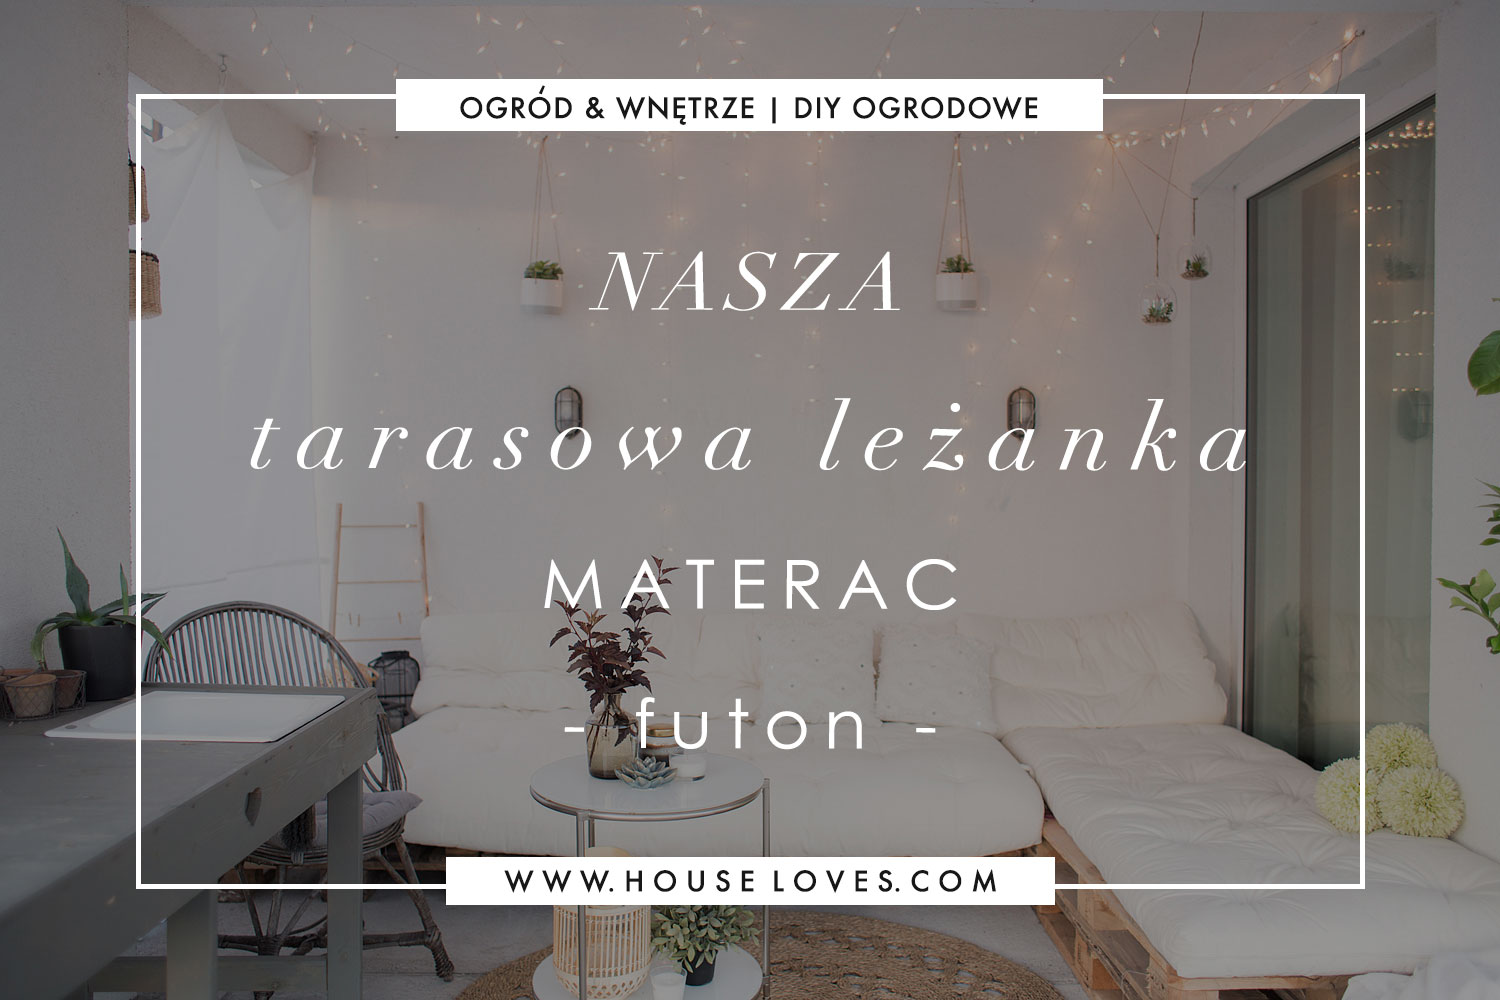 Associate badminton Part Nasza Leżanka na Tarasie - Materac Futon — HOUSE LOVES